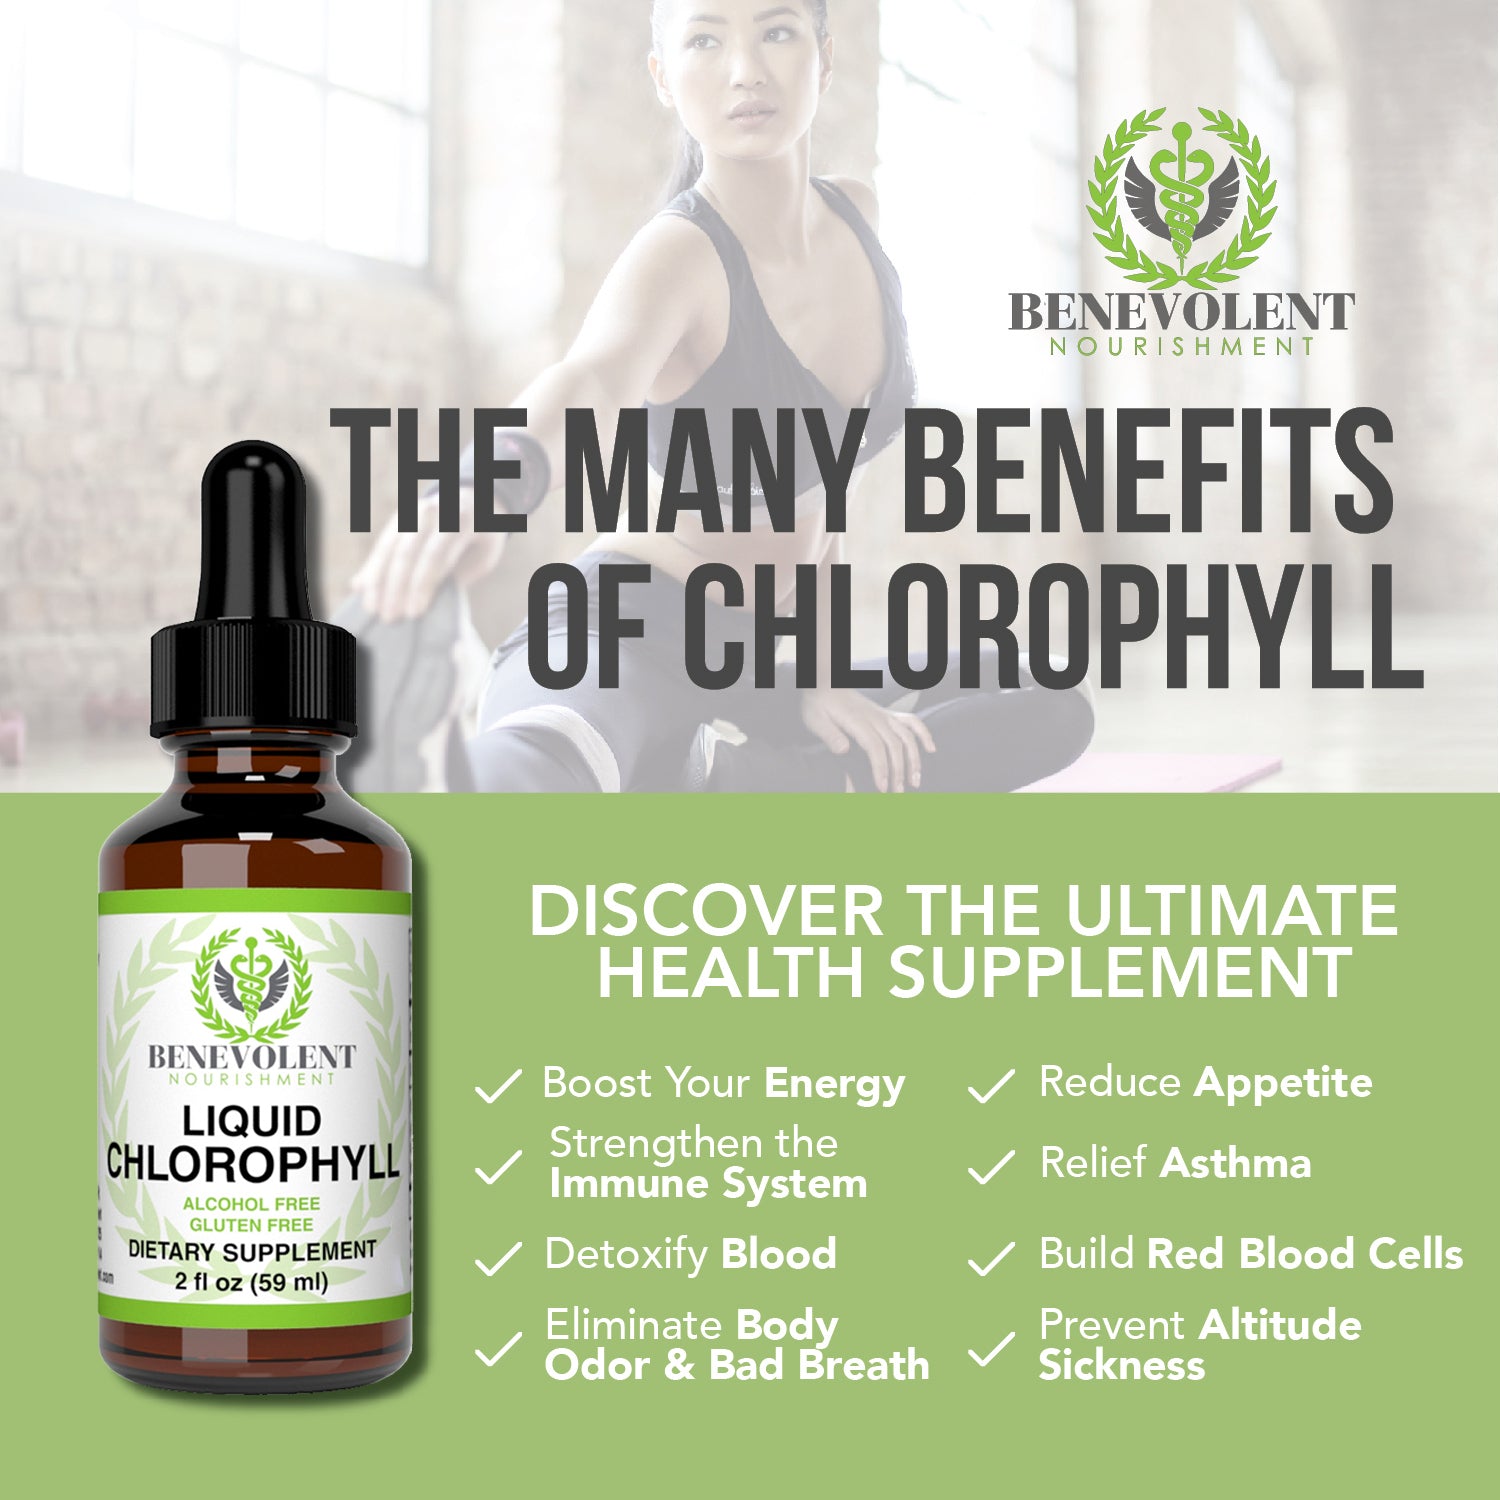 The many benefits of Liquid Chlorophyll